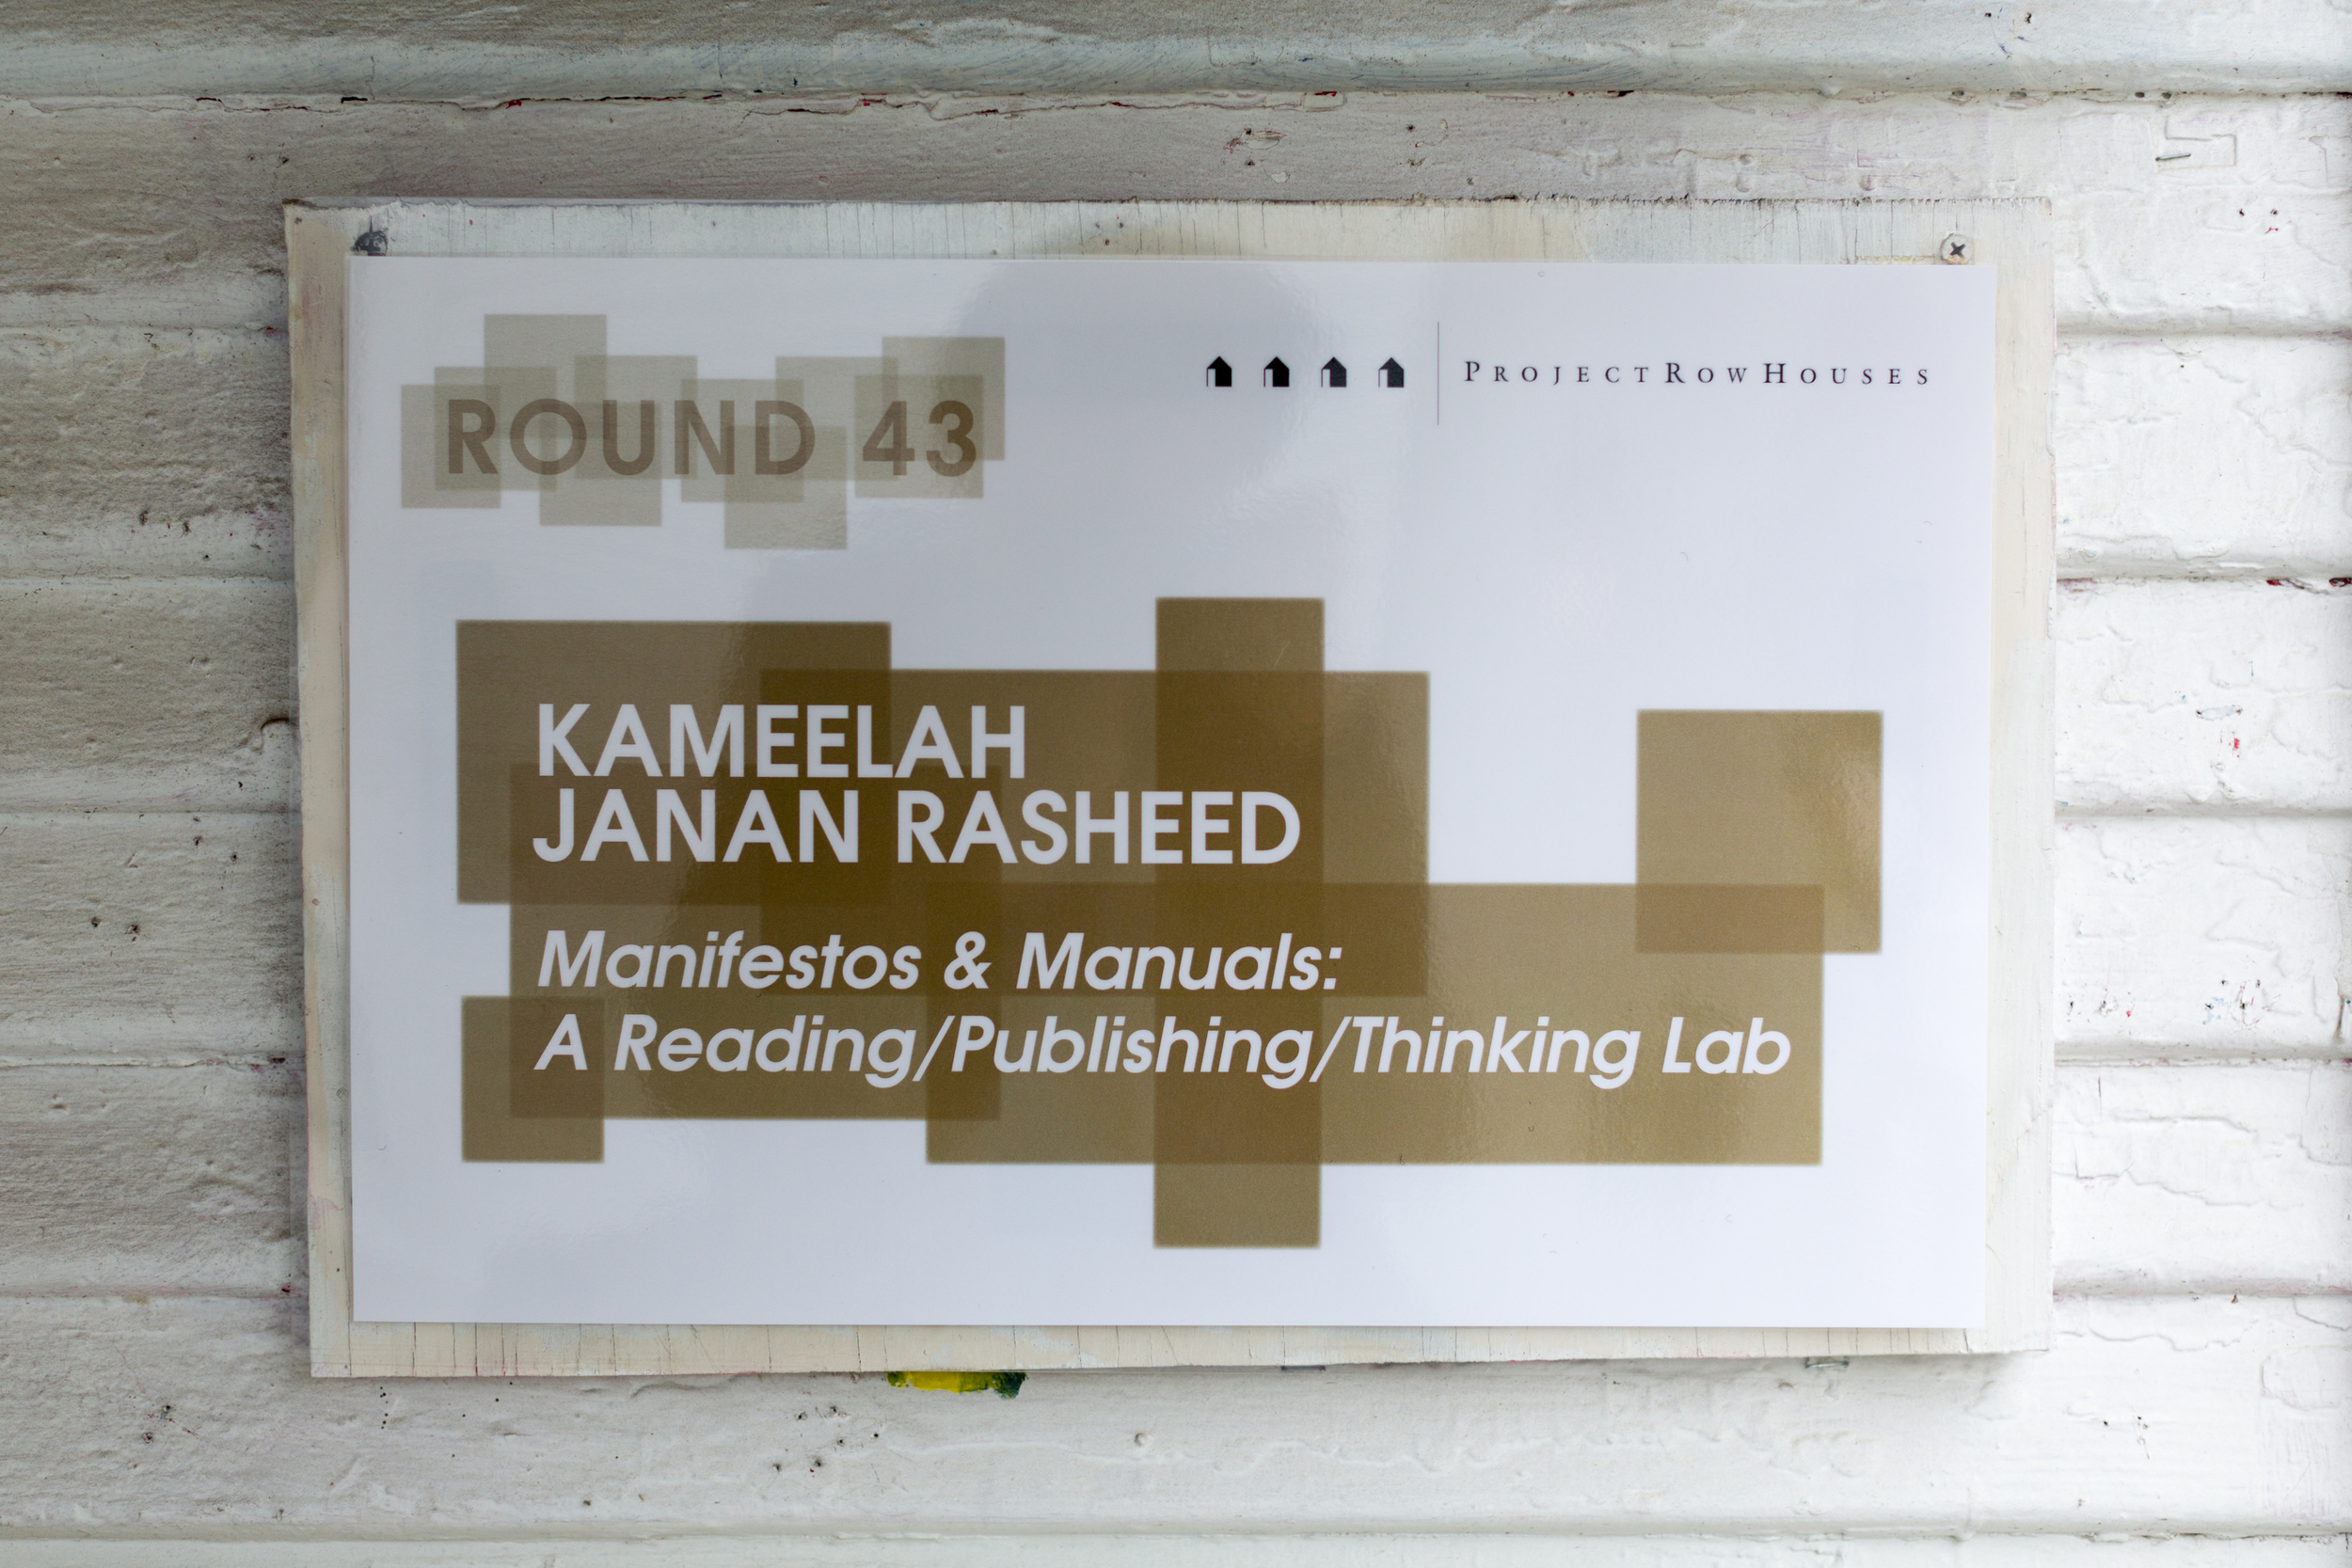  Manifestos &amp; Manuals: A Reading/Publishing/Thinking Lab , Kameelah Janan Rasheed 2509 Holman St. 